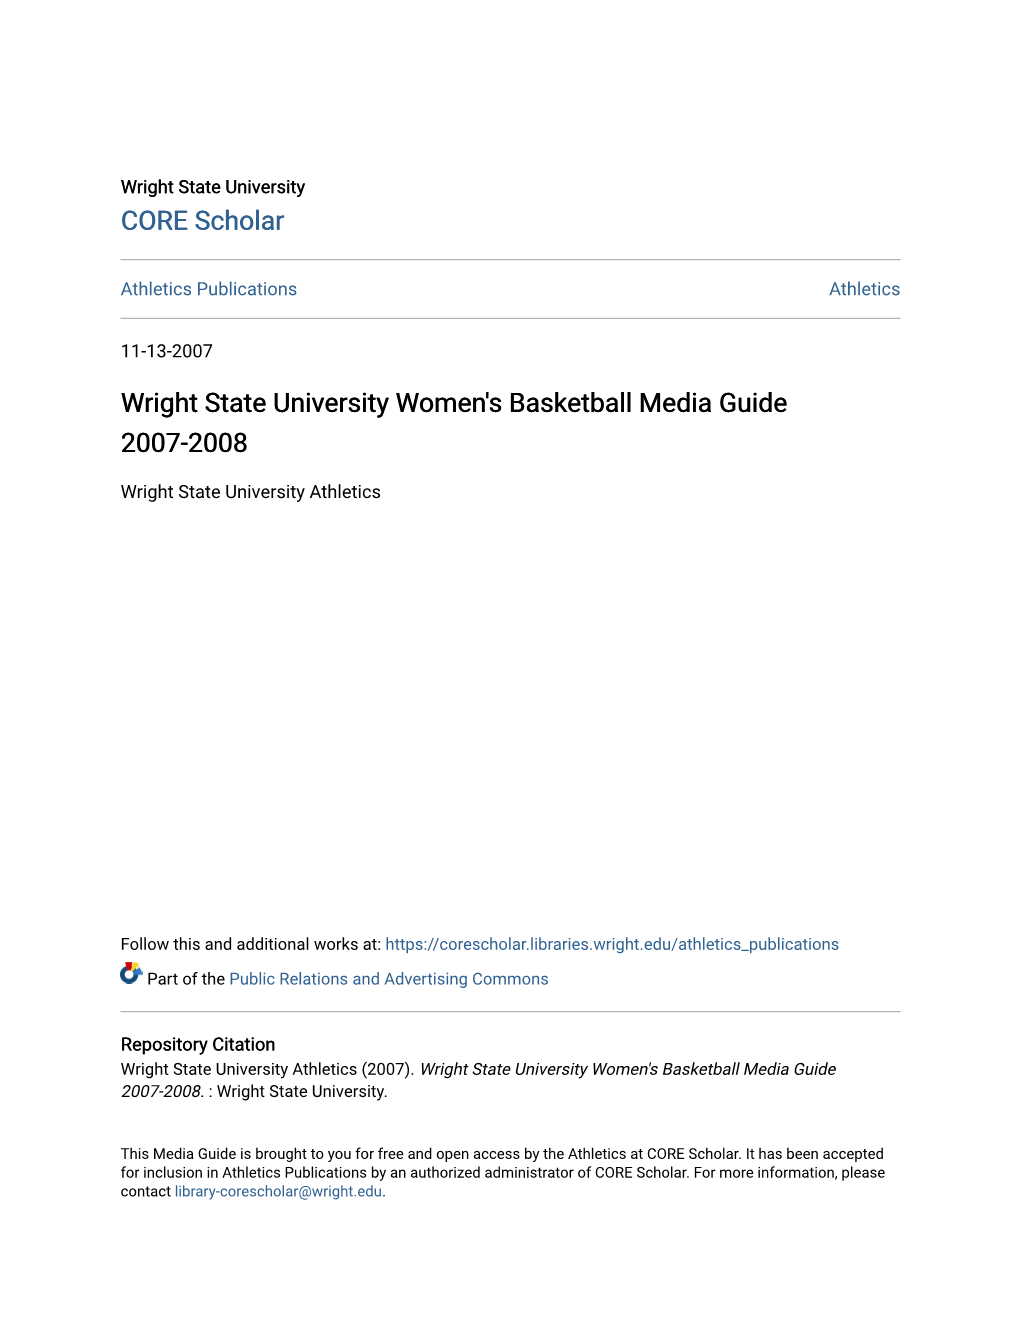 Wright State University Women's Basketball Media Guide 2007-2008